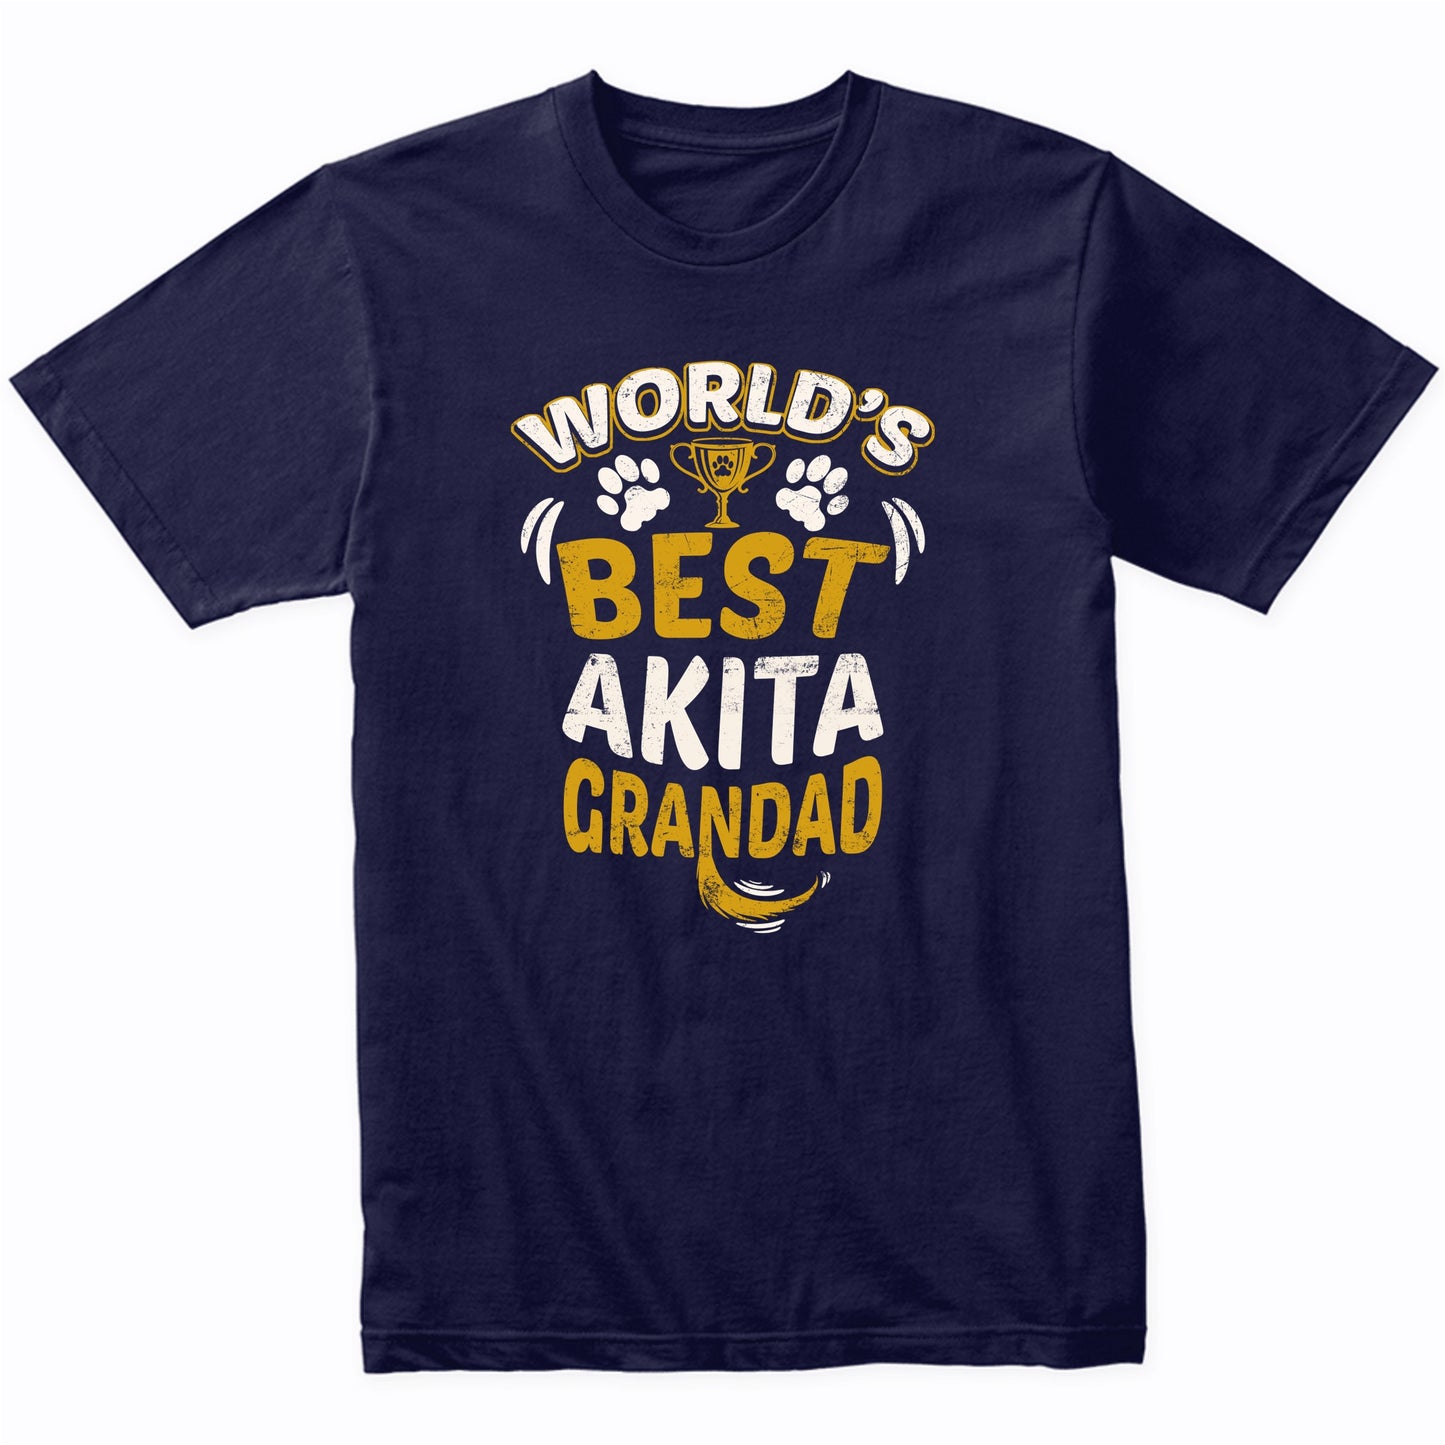 World's Best Akita Grandad Graphic T-Shirt